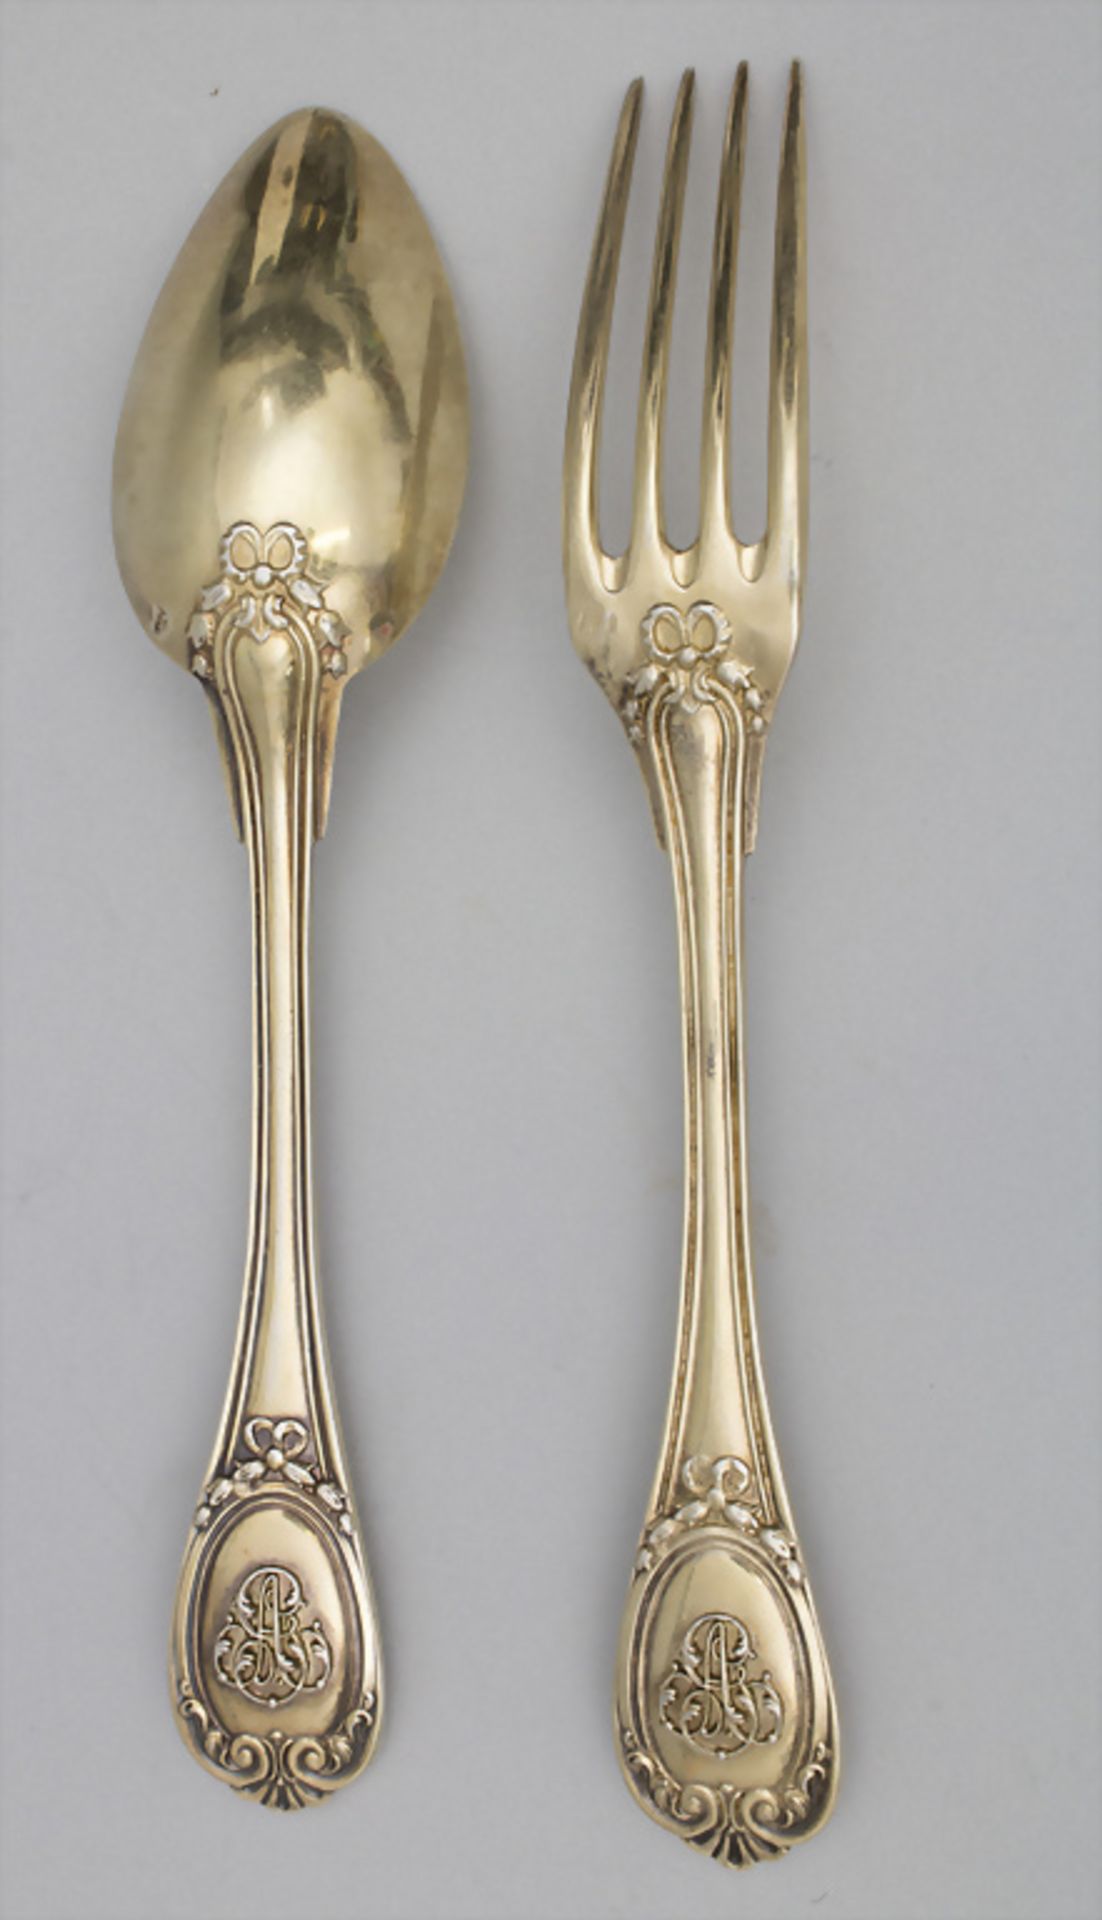 12-teiliges Silberbesteck / A 12-part silver cutlery, Veyrat, Paris, um 1900 - Image 4 of 8